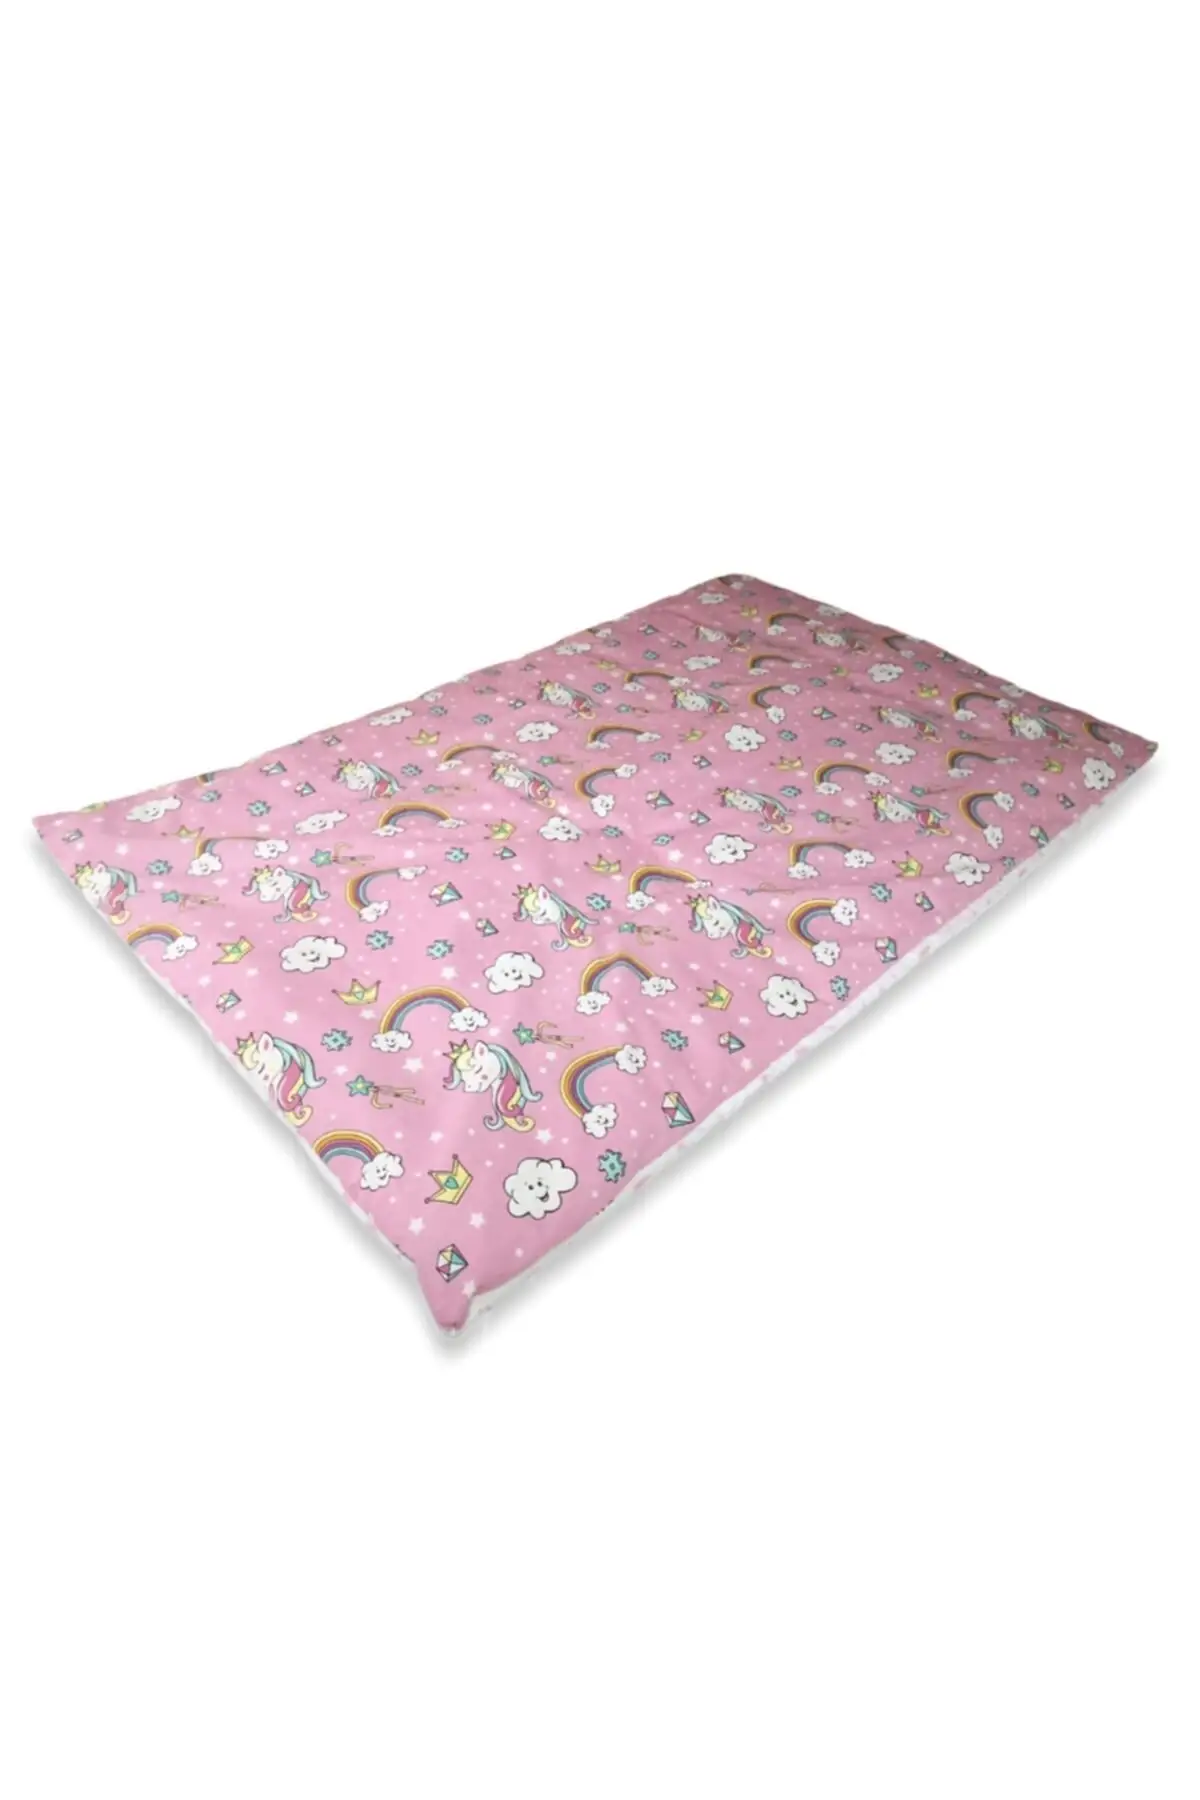 Baby child quilt standard 100x x Cm pink Unicorn star Unicorn star x fiber cotton baby & kids quilt home textile